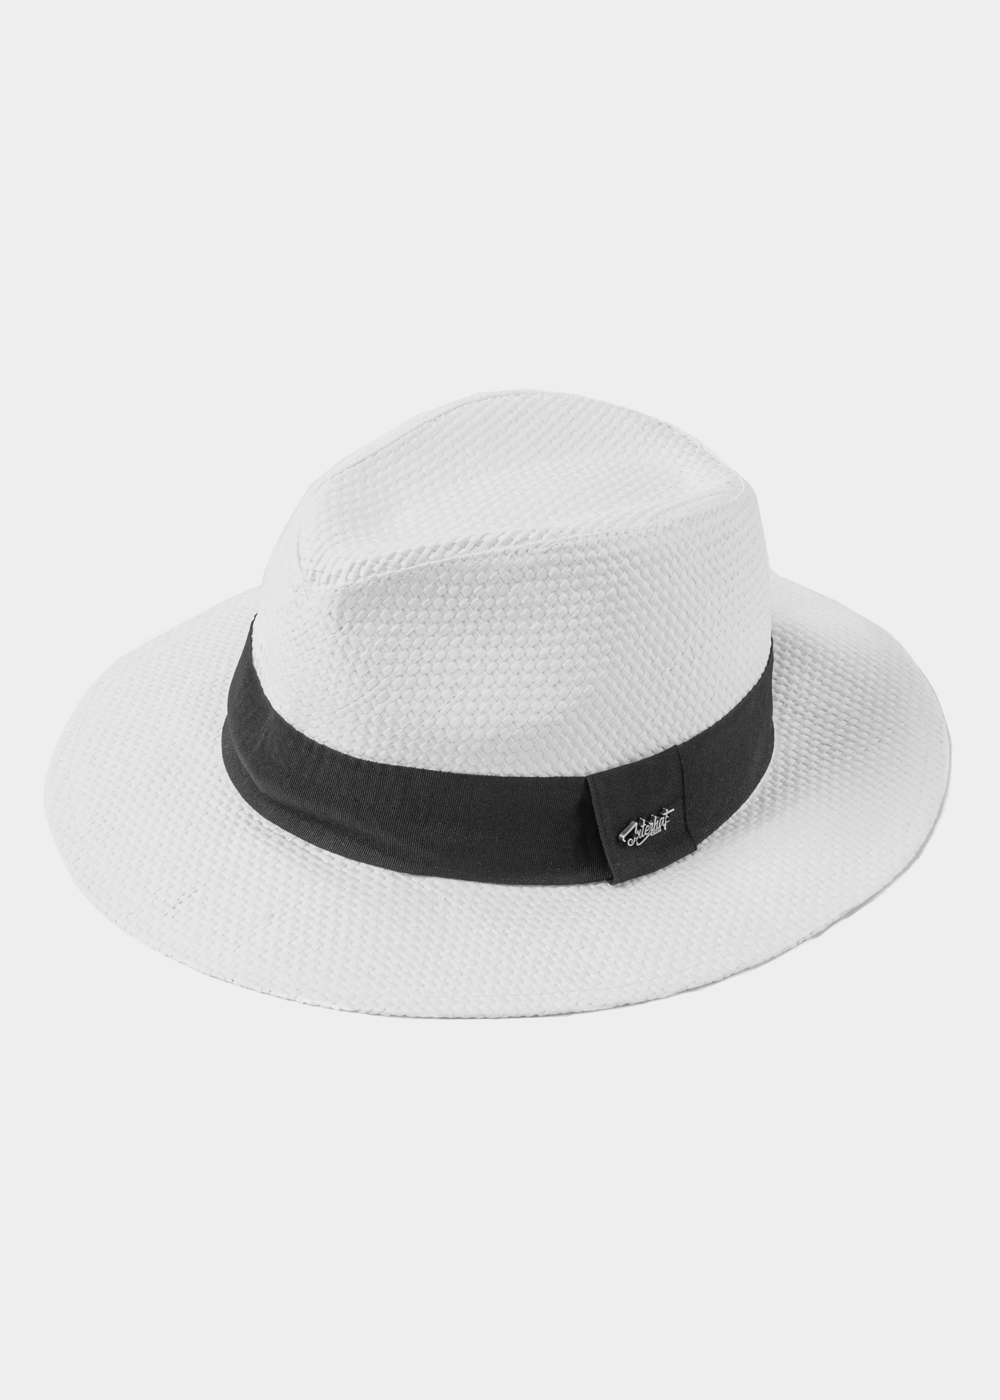 White Panama Style Hat 3